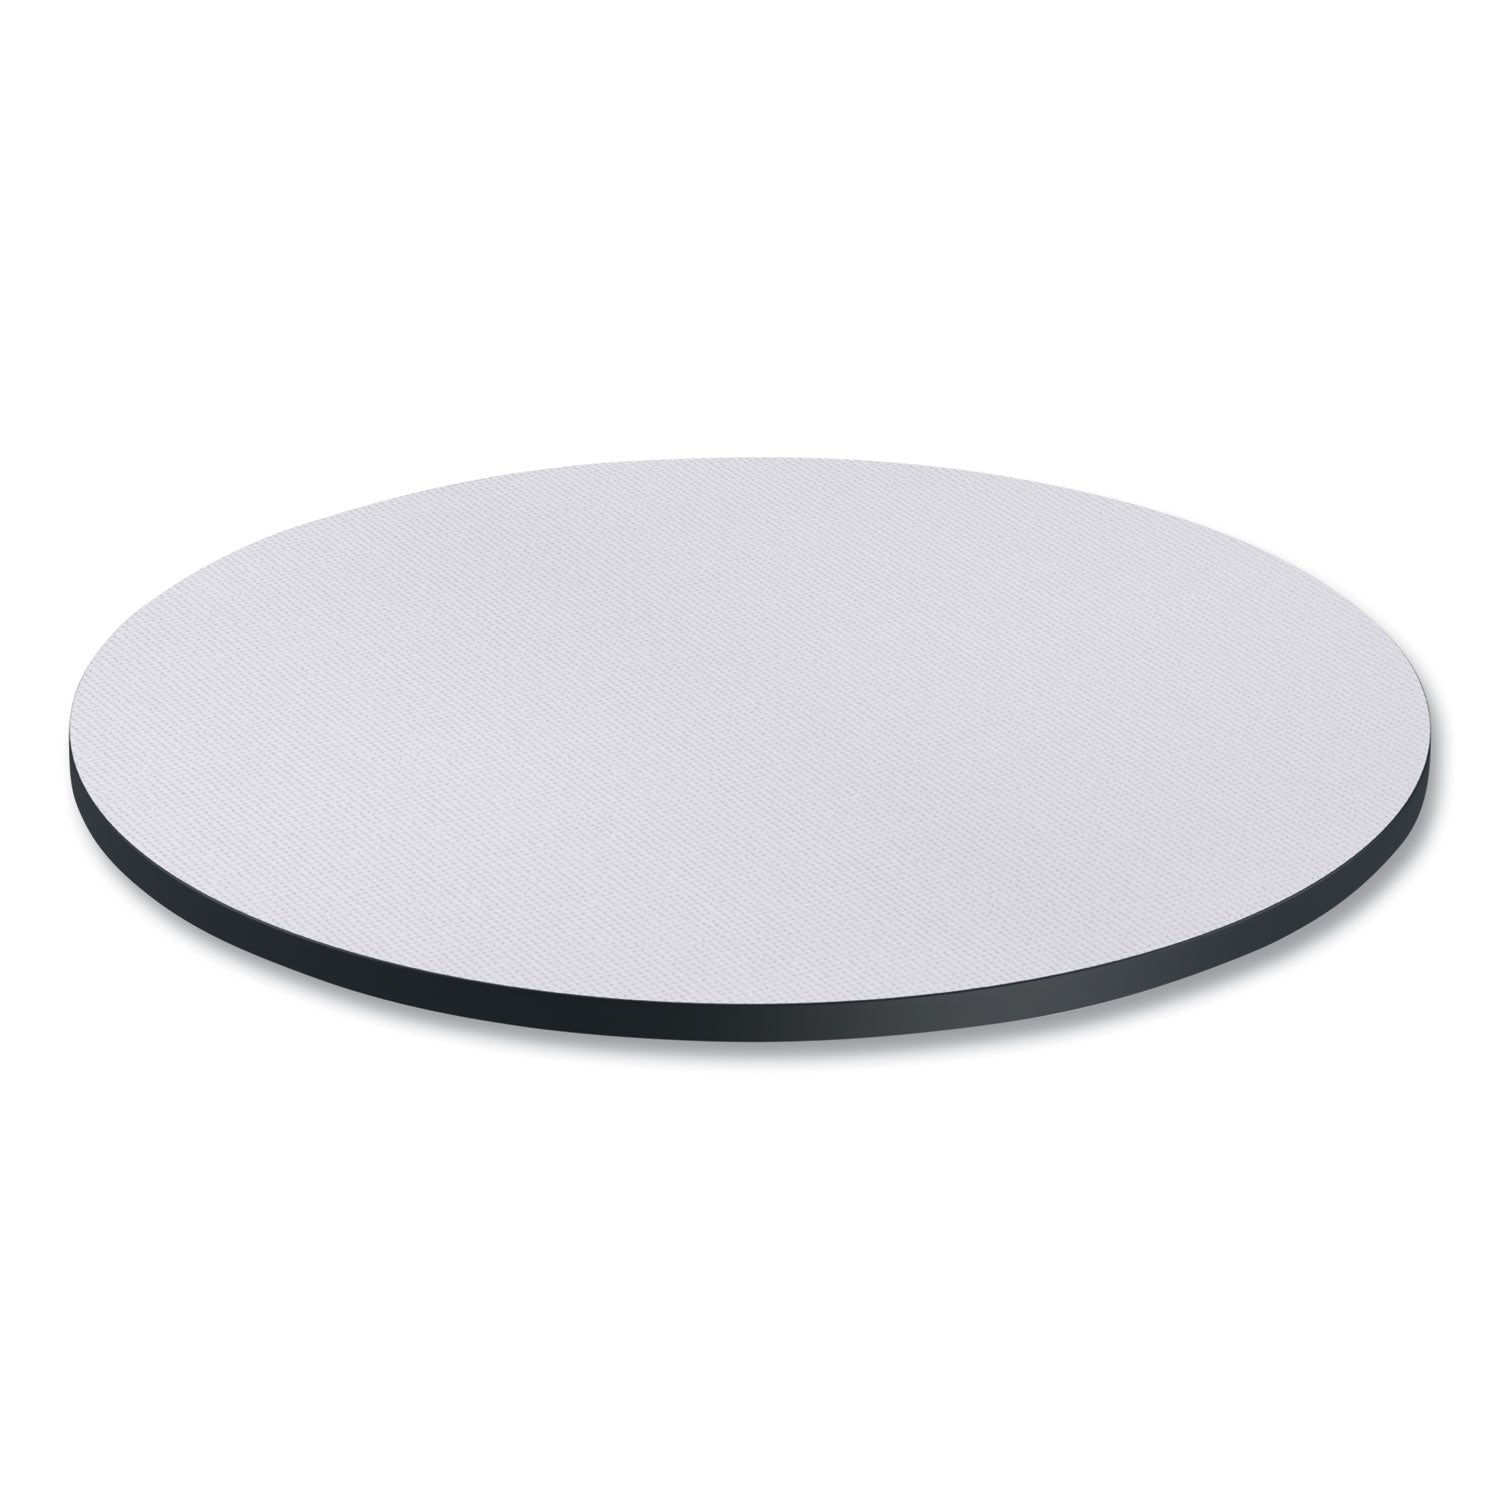 reversible-laminate-table-top-round-355-diameter-white-gray_alettrd36wg - 6